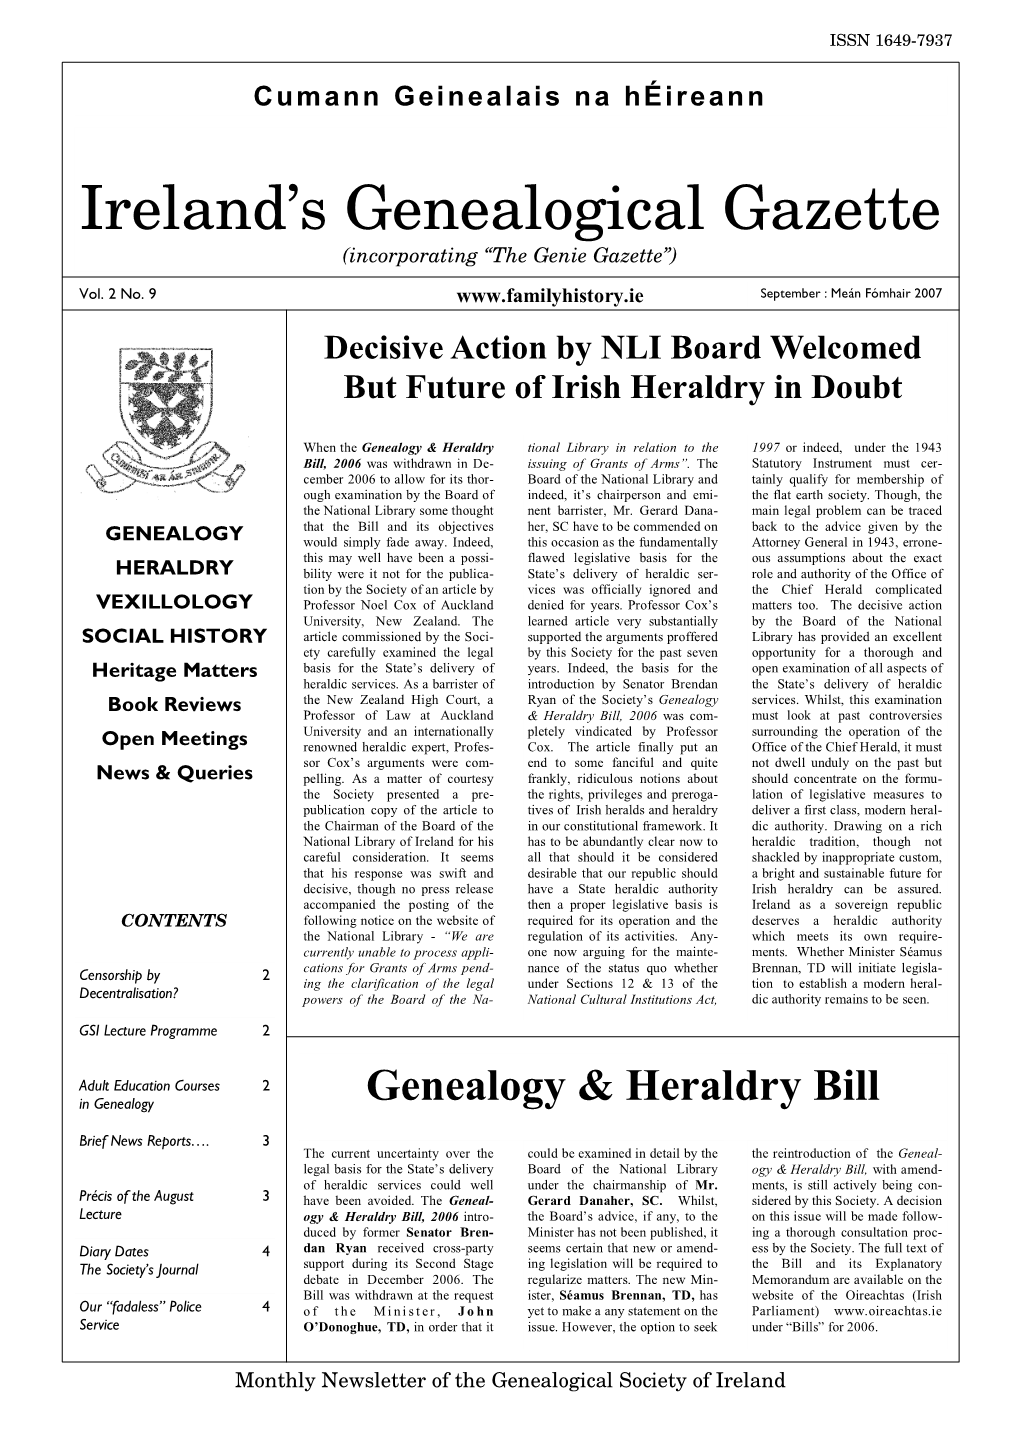 Ireland's Genealogical Gazette (Sept[1]. 2007)